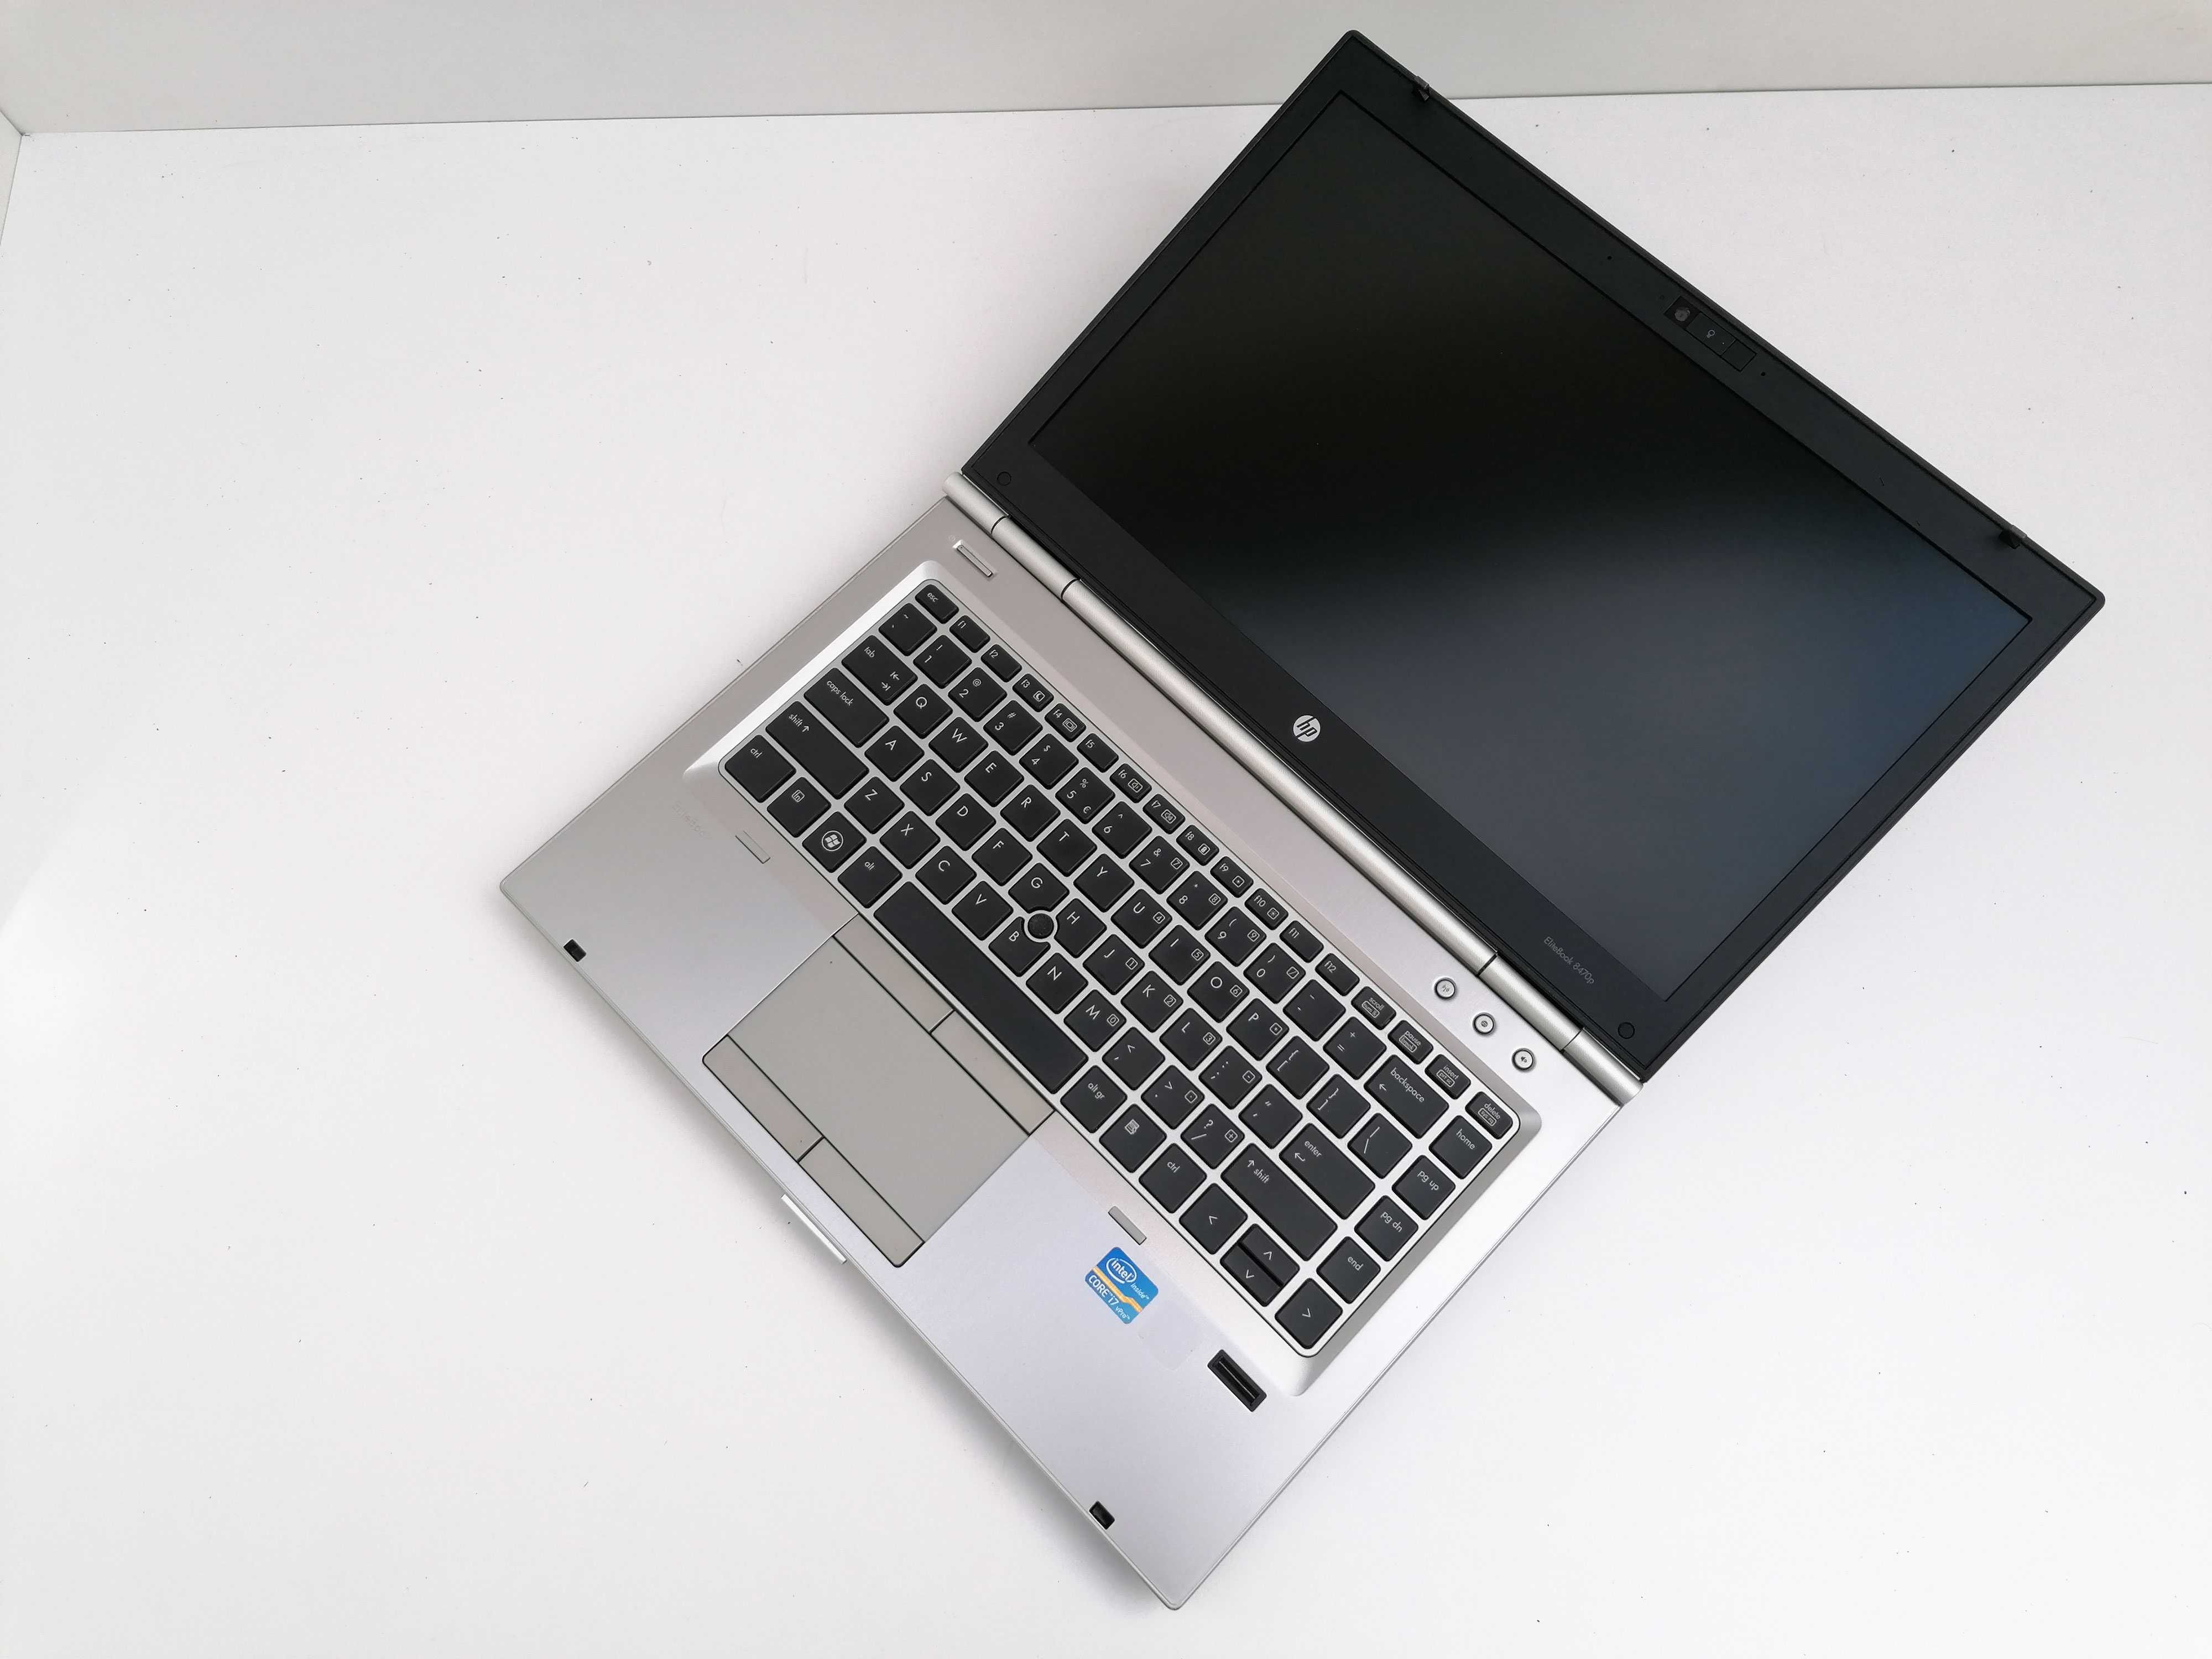 HP EliteBook 8470p Impecabil cu Procesor i7 QM 4 cores